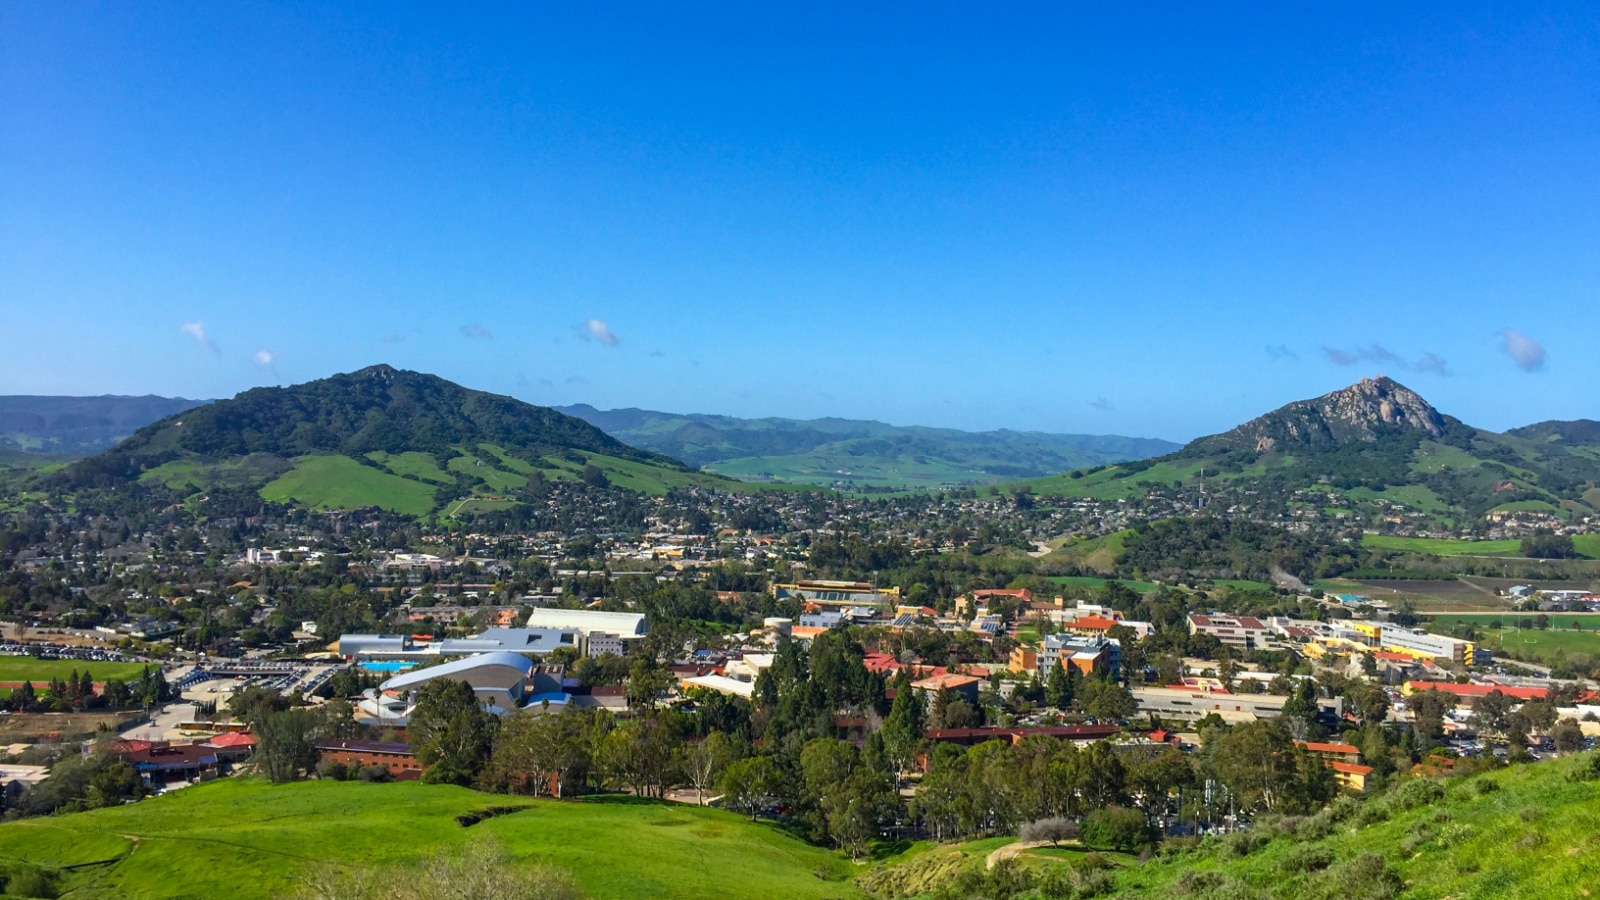 San Luis Obispo city from Cerro San Luis Peak in spring season, CA